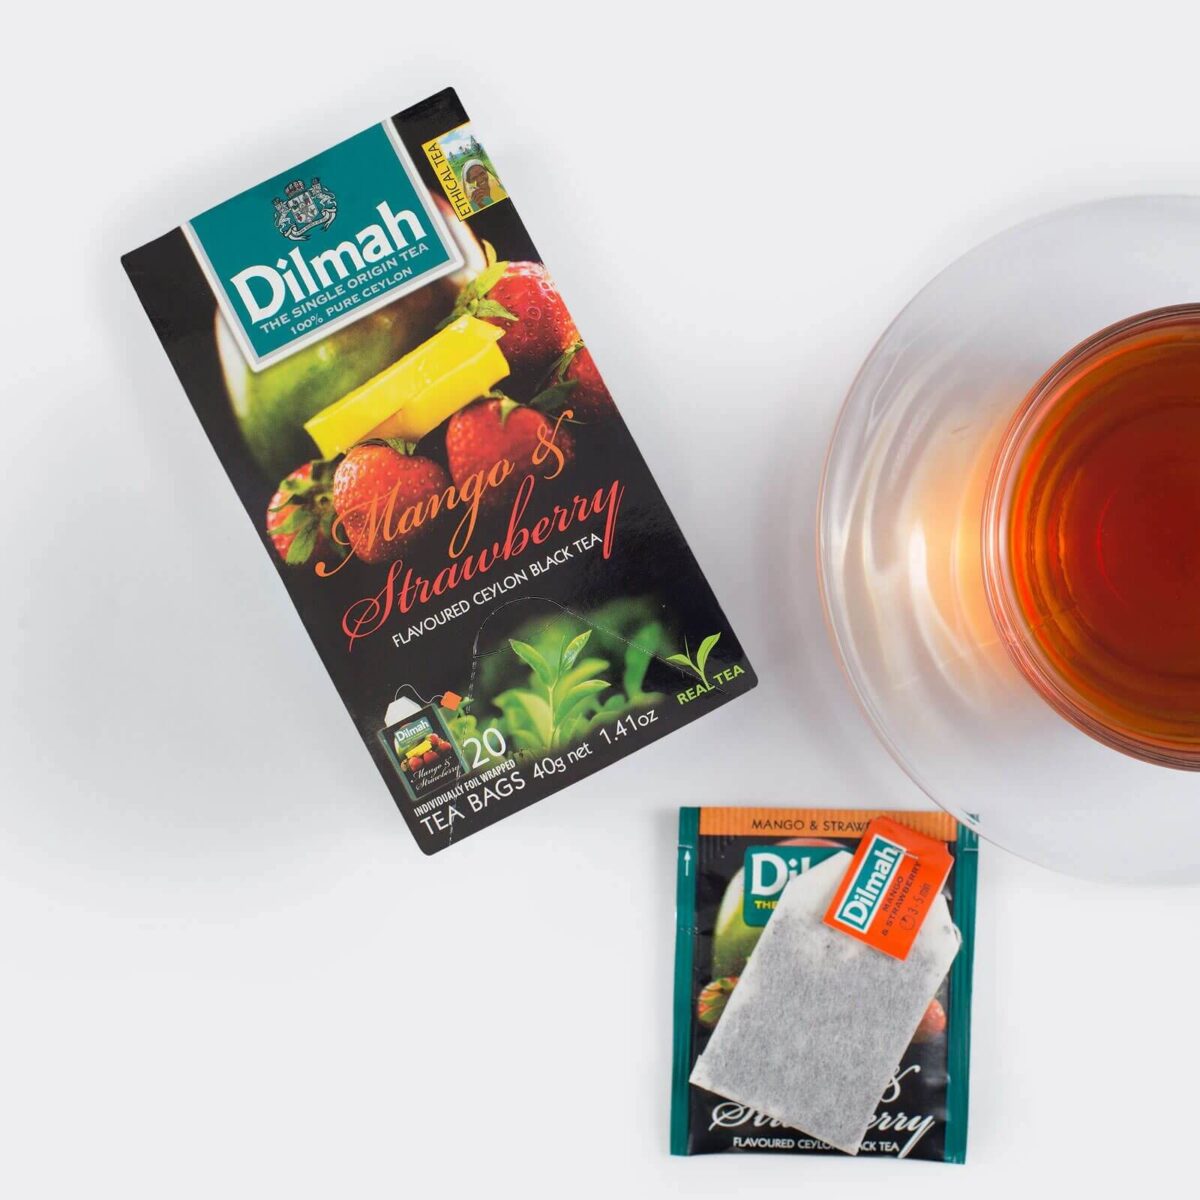 Dilmah Ceylon tea with Mango and strawberry flavors